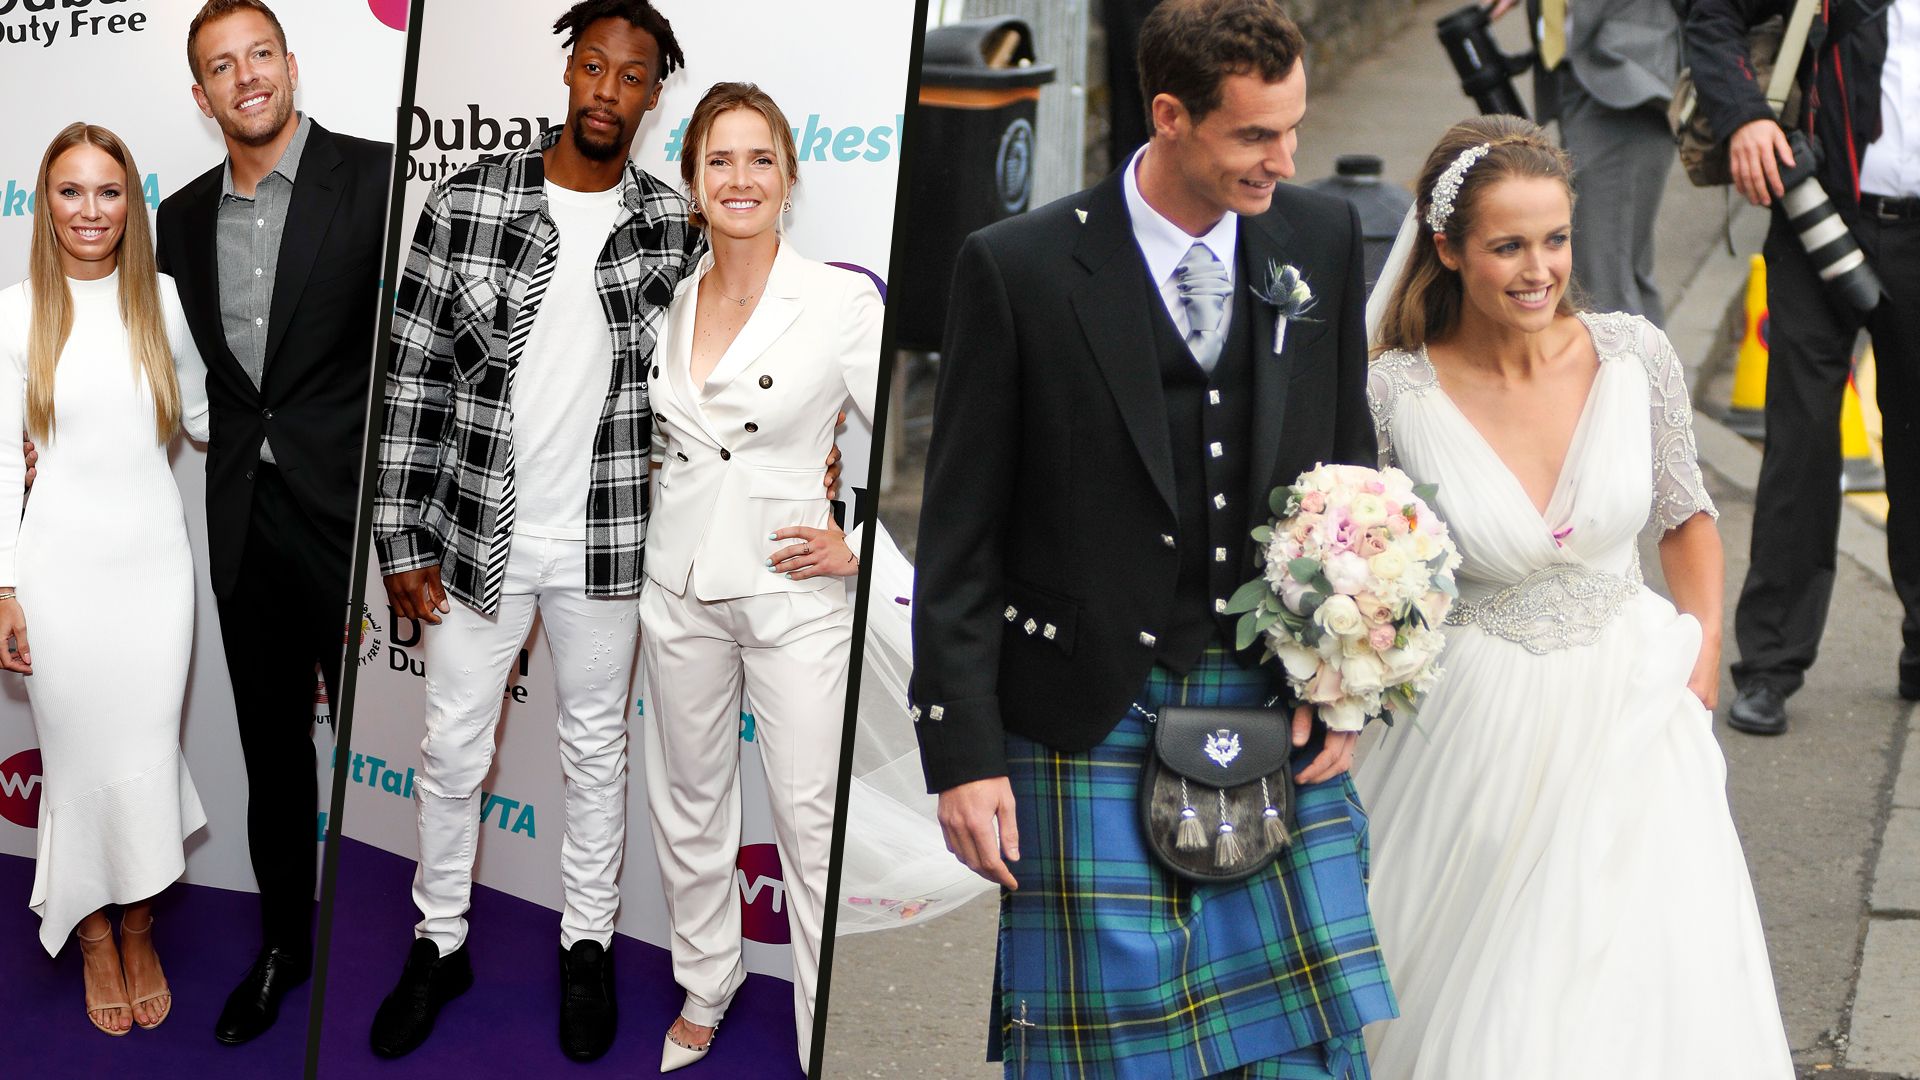 Wimbledon stars' weddings, from Elina Svitolina to Andy Murray